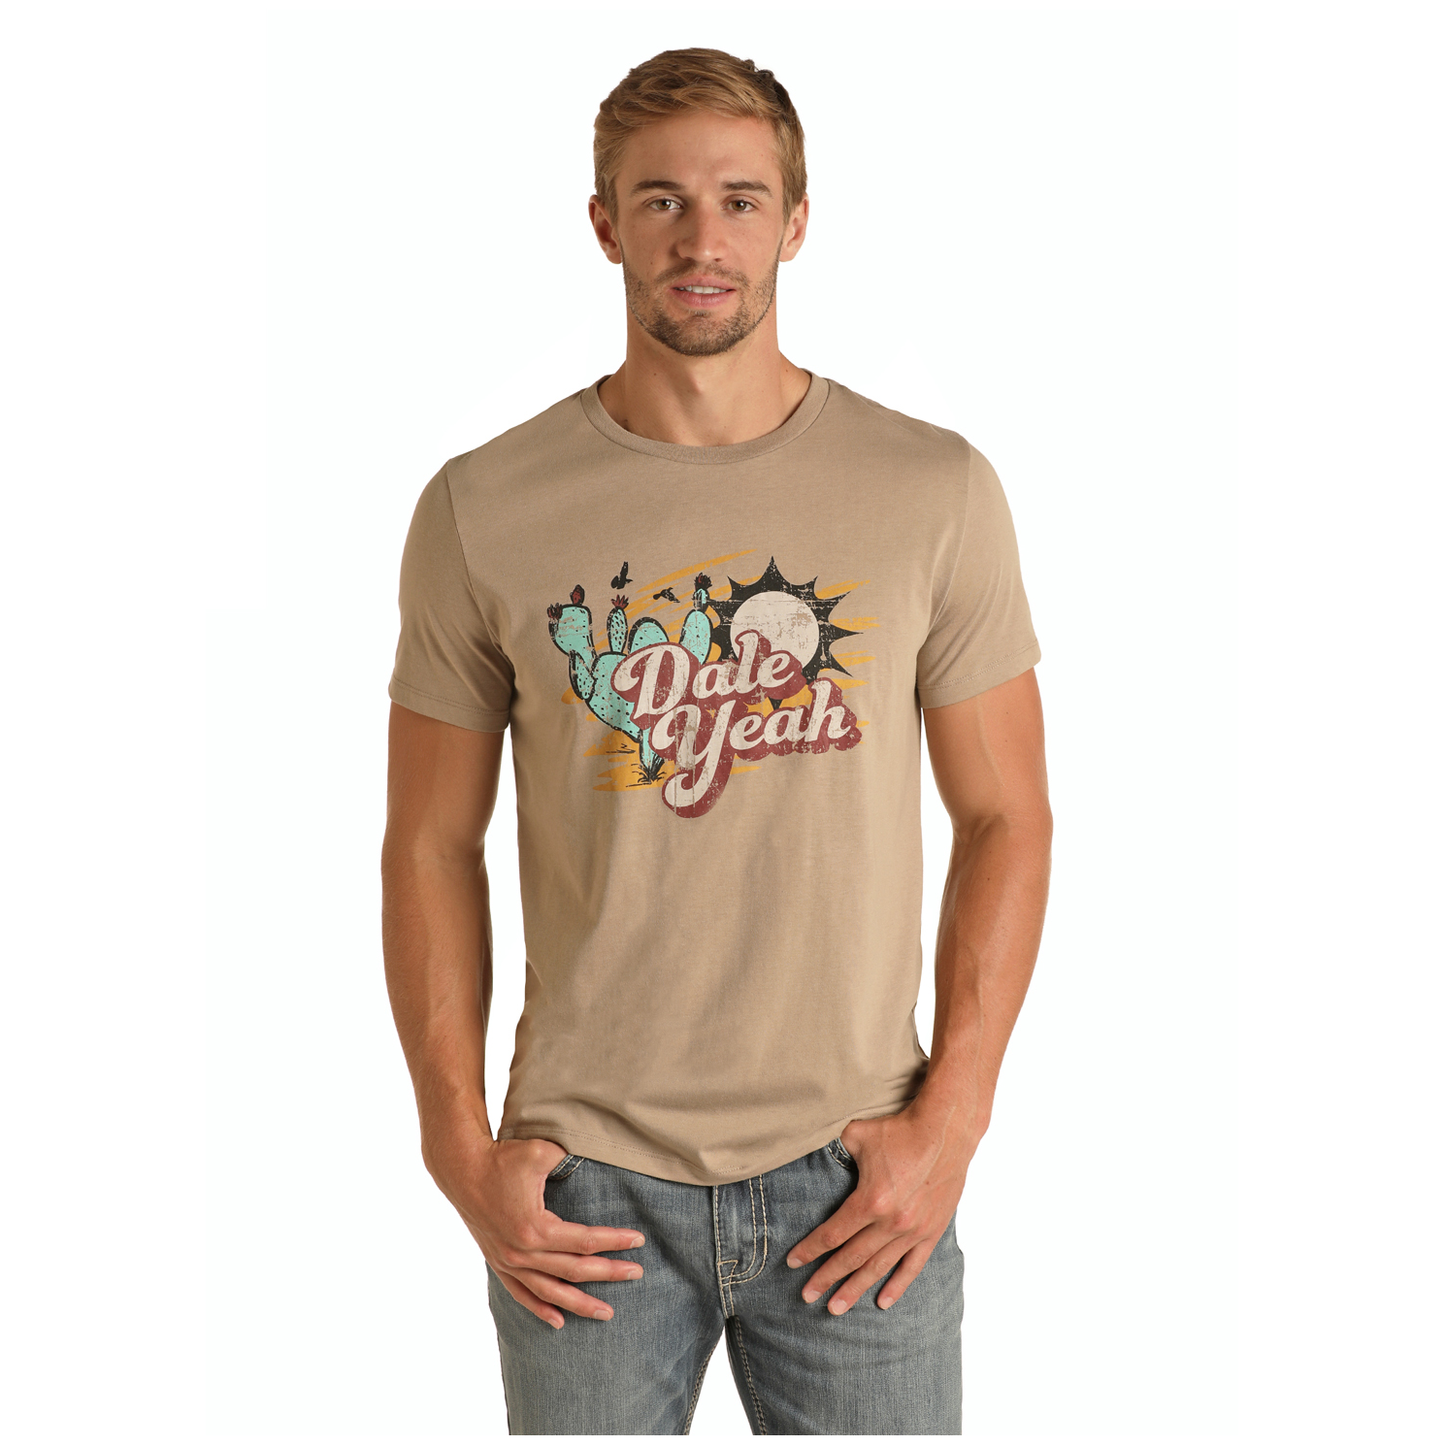 Rock & Roll Denim Men's "Dale Yeah" with Cactus Graphic T-Shirt P9-3363